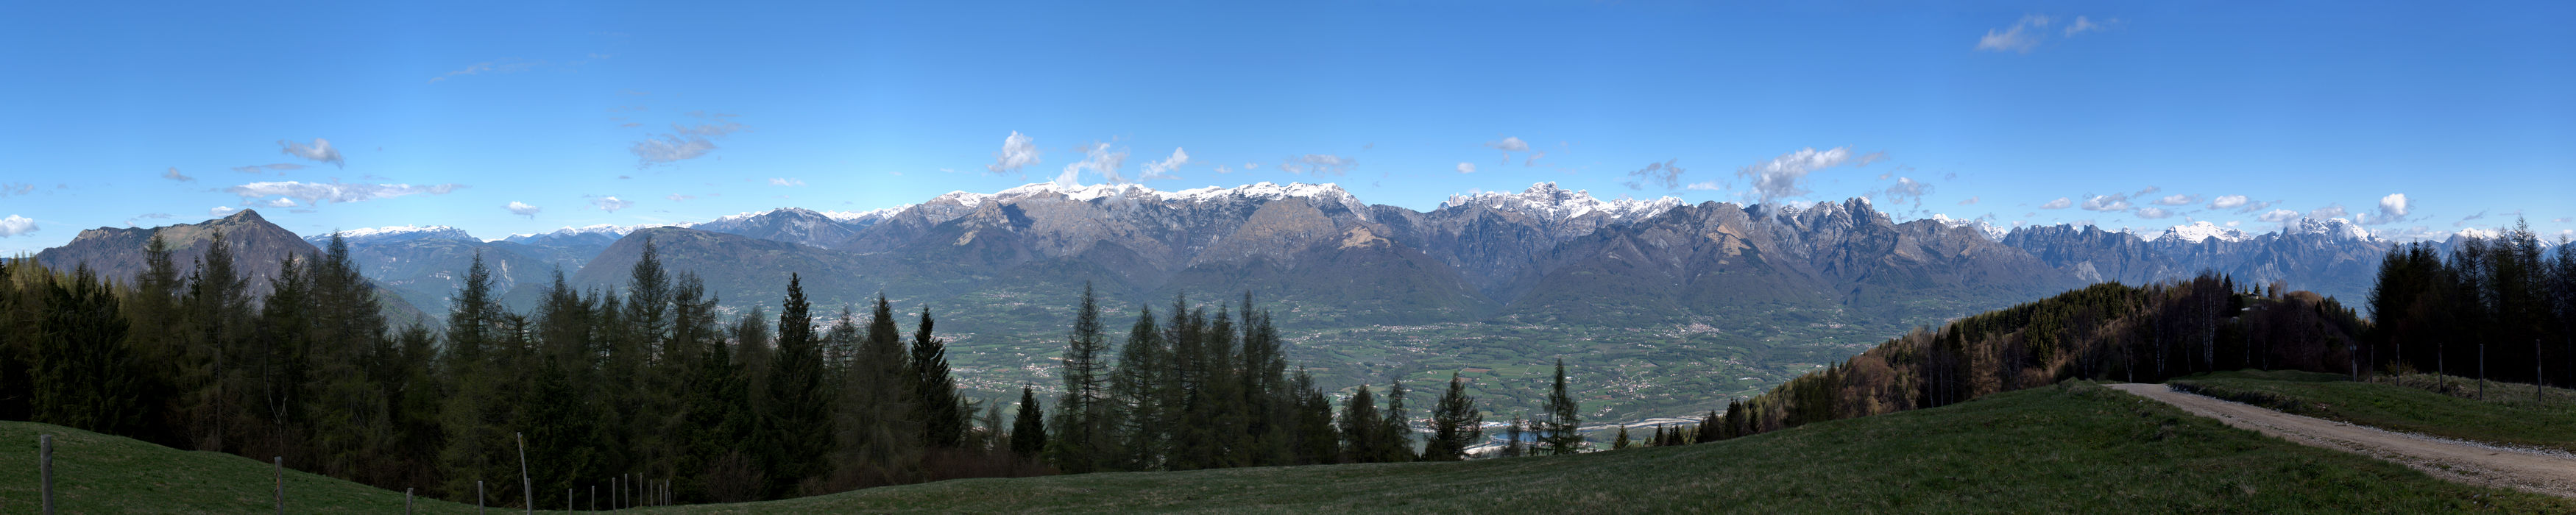 Lentiai, monte Artent malga Monte Garda